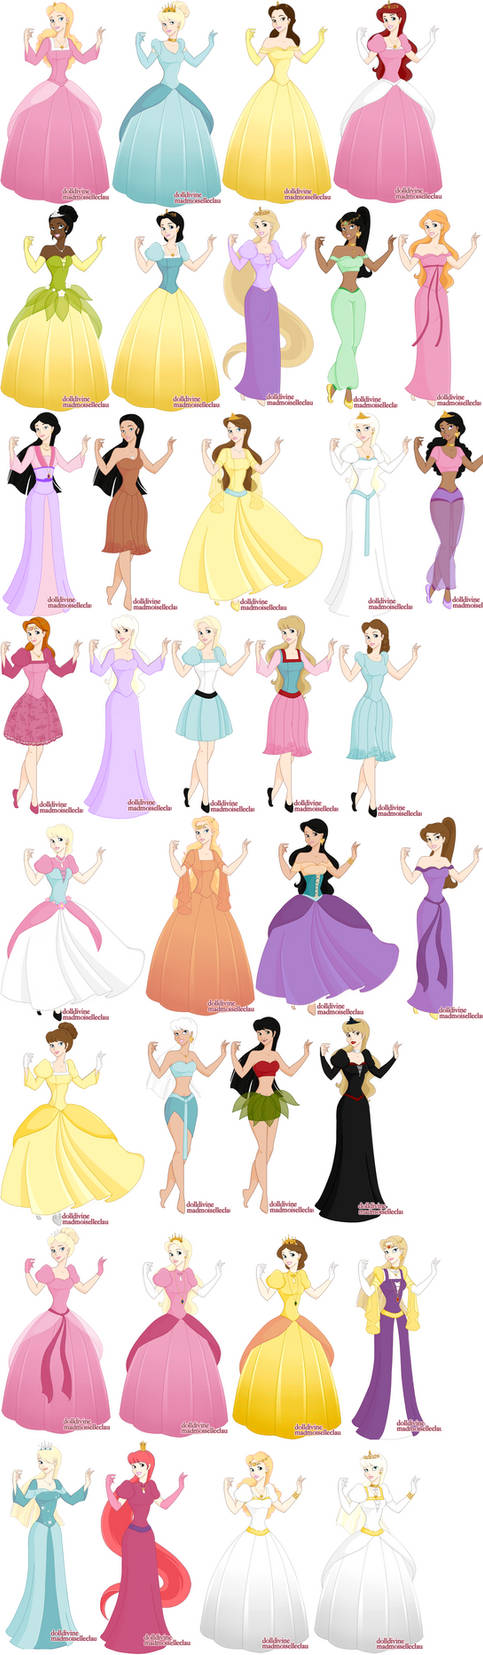 Disney and Non Disney Princesses by roseprincessmitia on DeviantArt